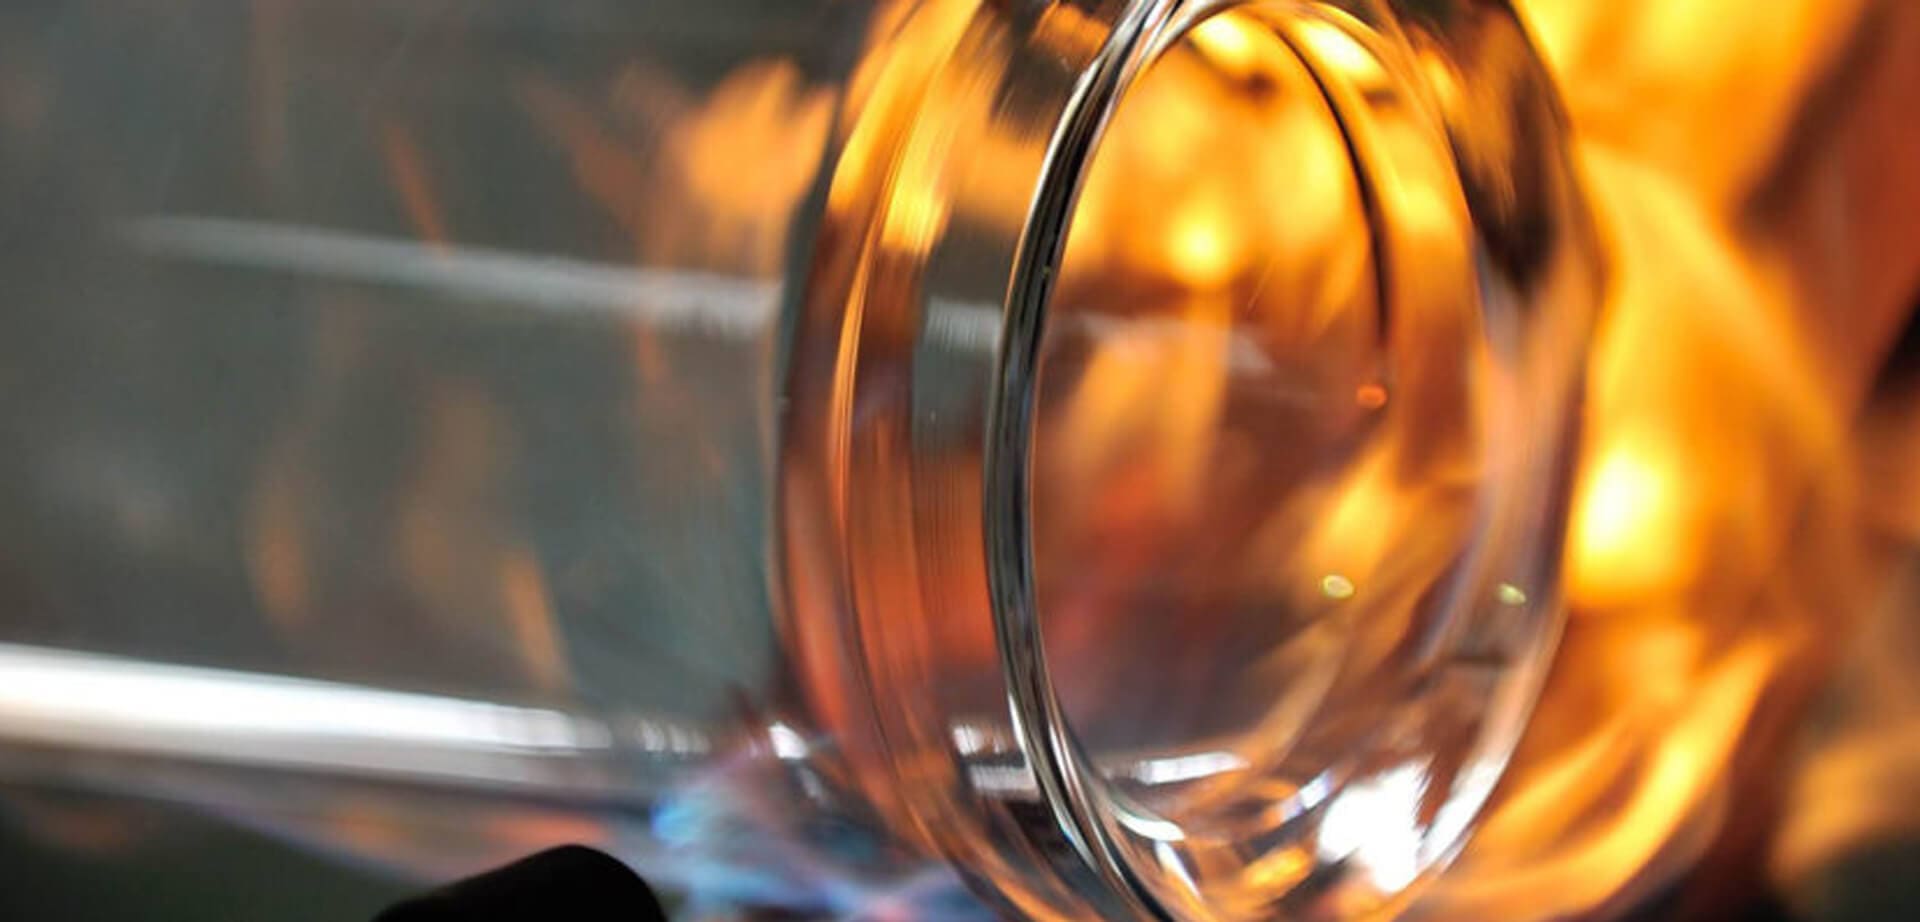 Scientific Glass Blowing, Industrial Glassware, Laboratory Glassware, Glass Valves, Rotary Evaporator